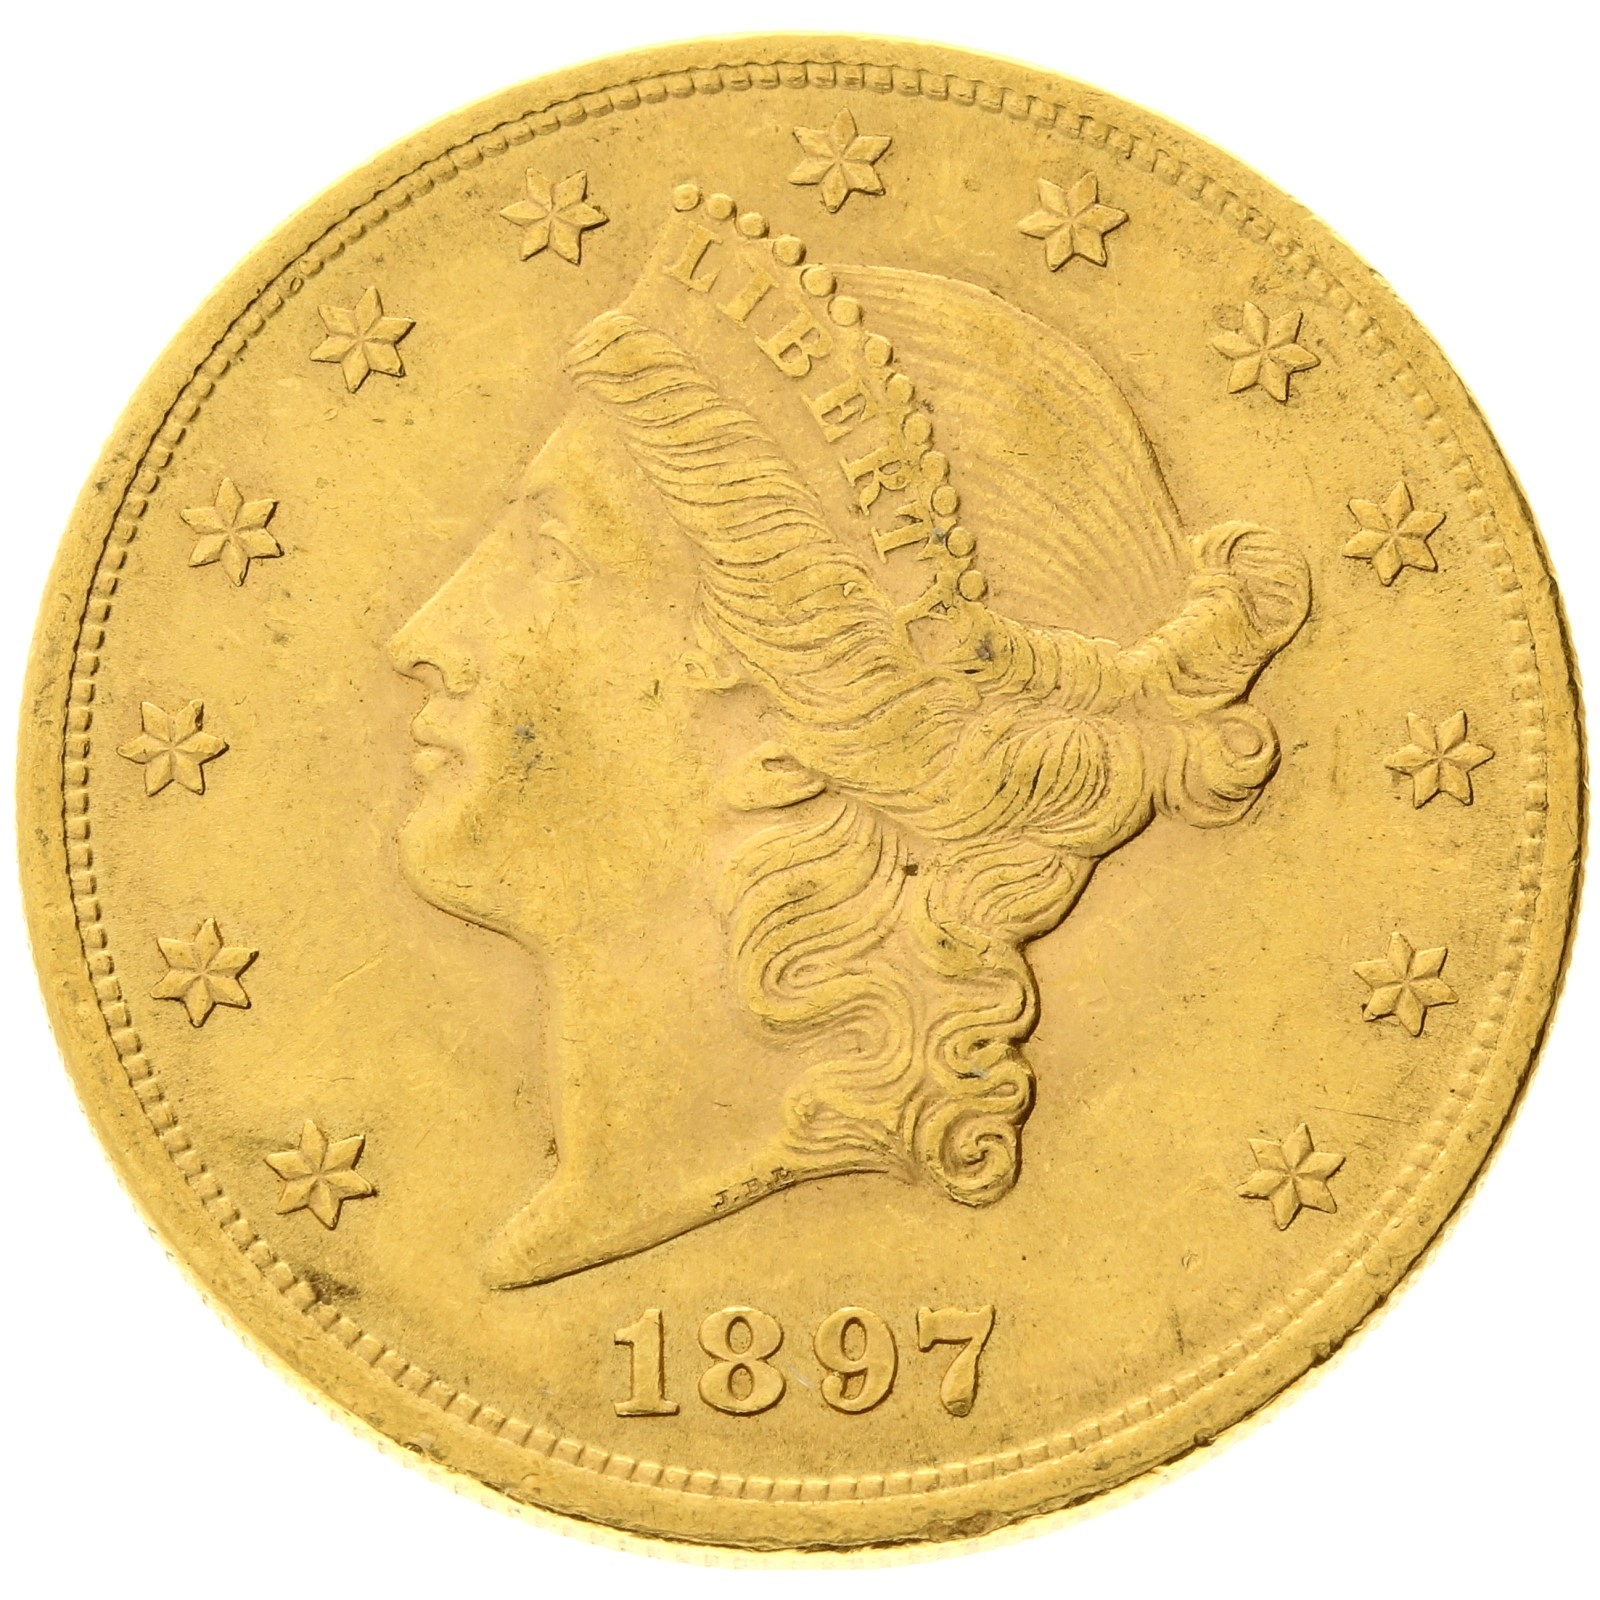 USA - 20 dollars - 1897 - Liberty Head 